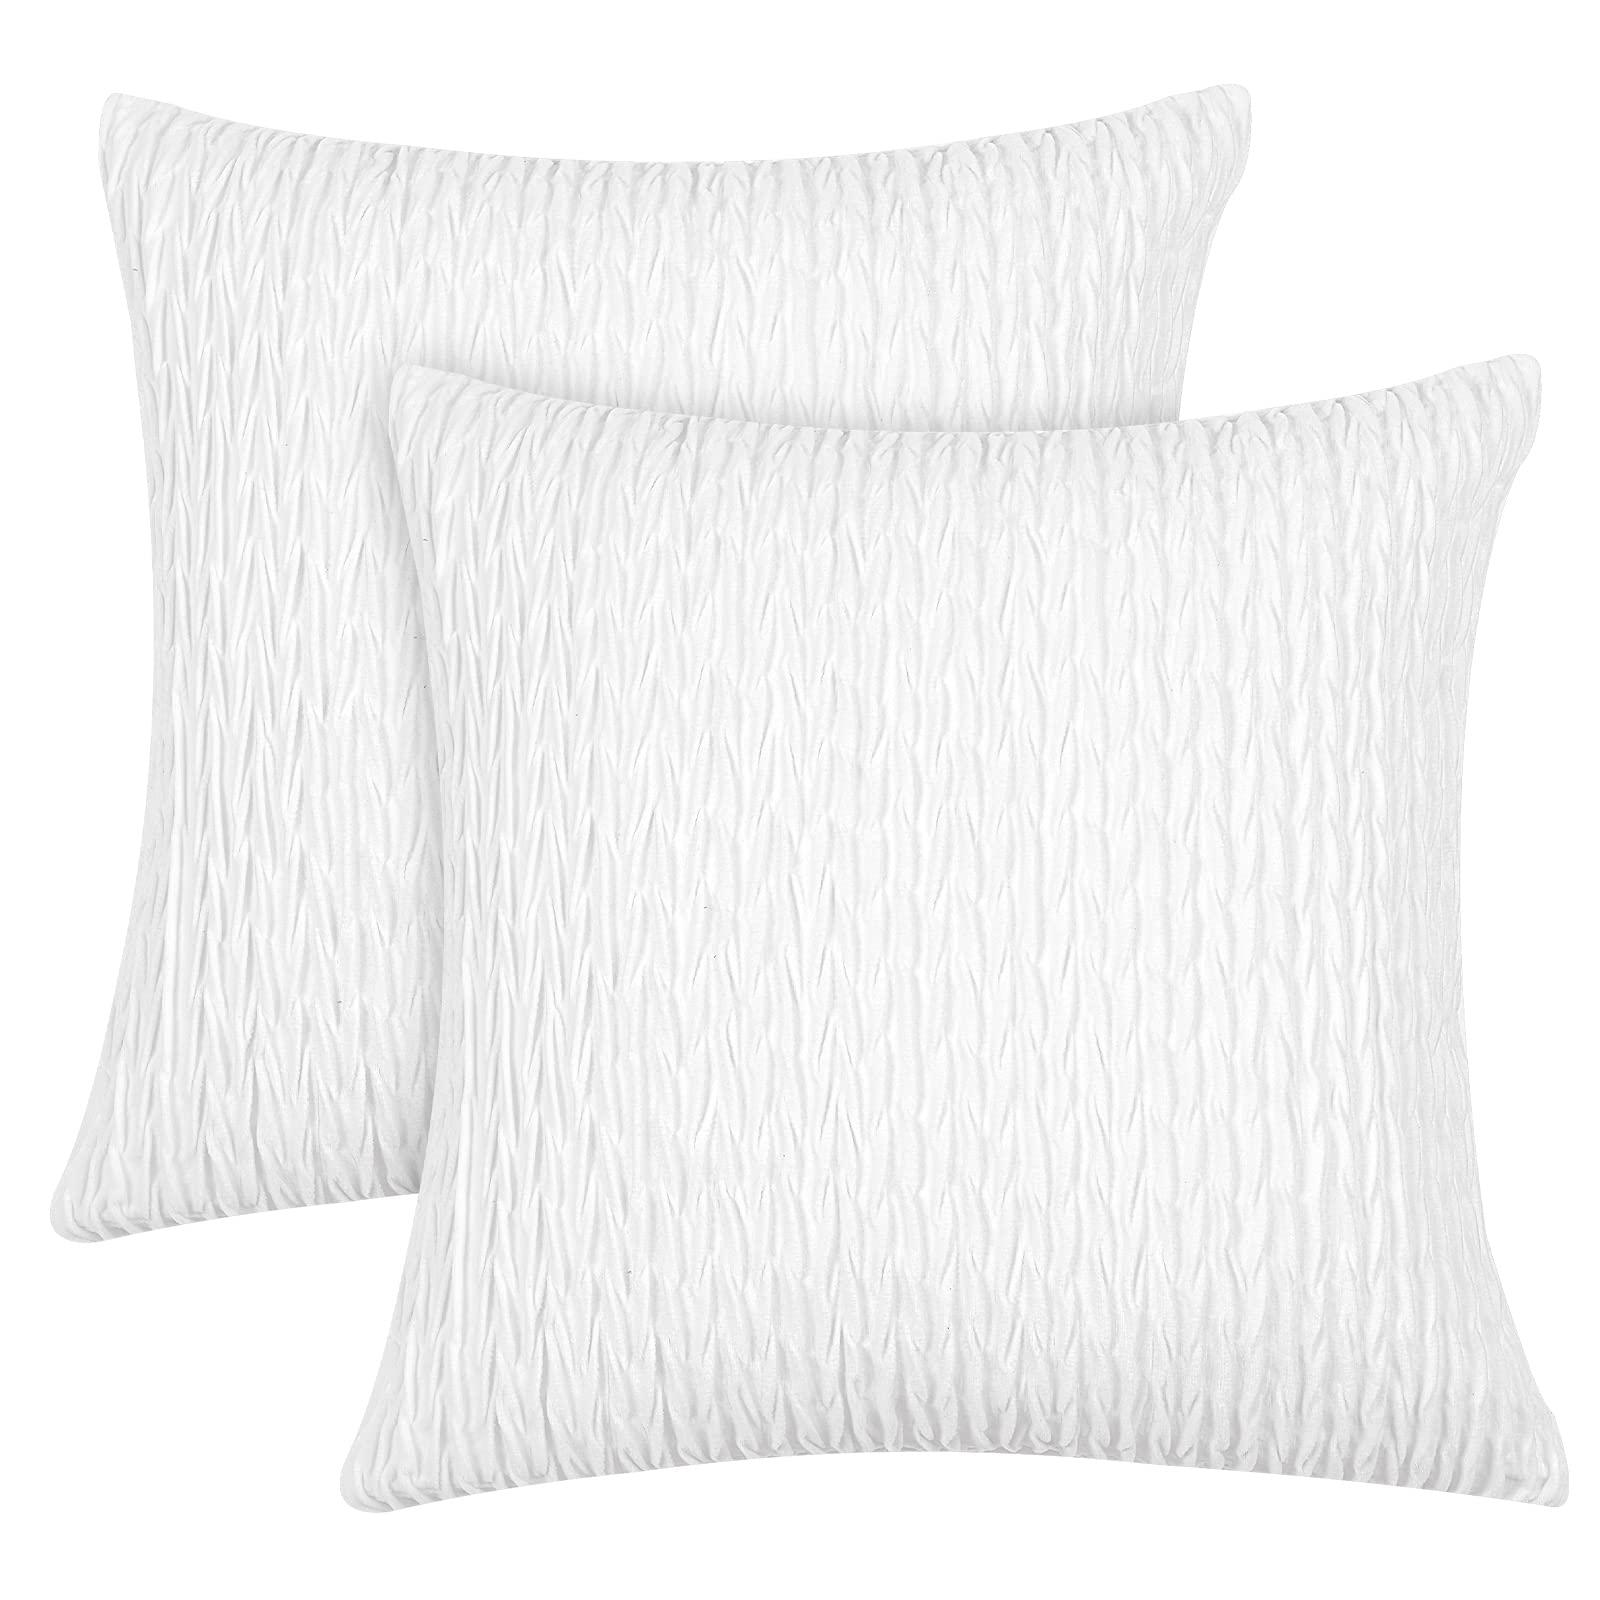 PHF Wrinkled Velvet Euro Sham, 26"x 26", No Insert, 2 Pack Texture Euro Throw Pillow Covers, Super Soft Cozy European Pillow Cov